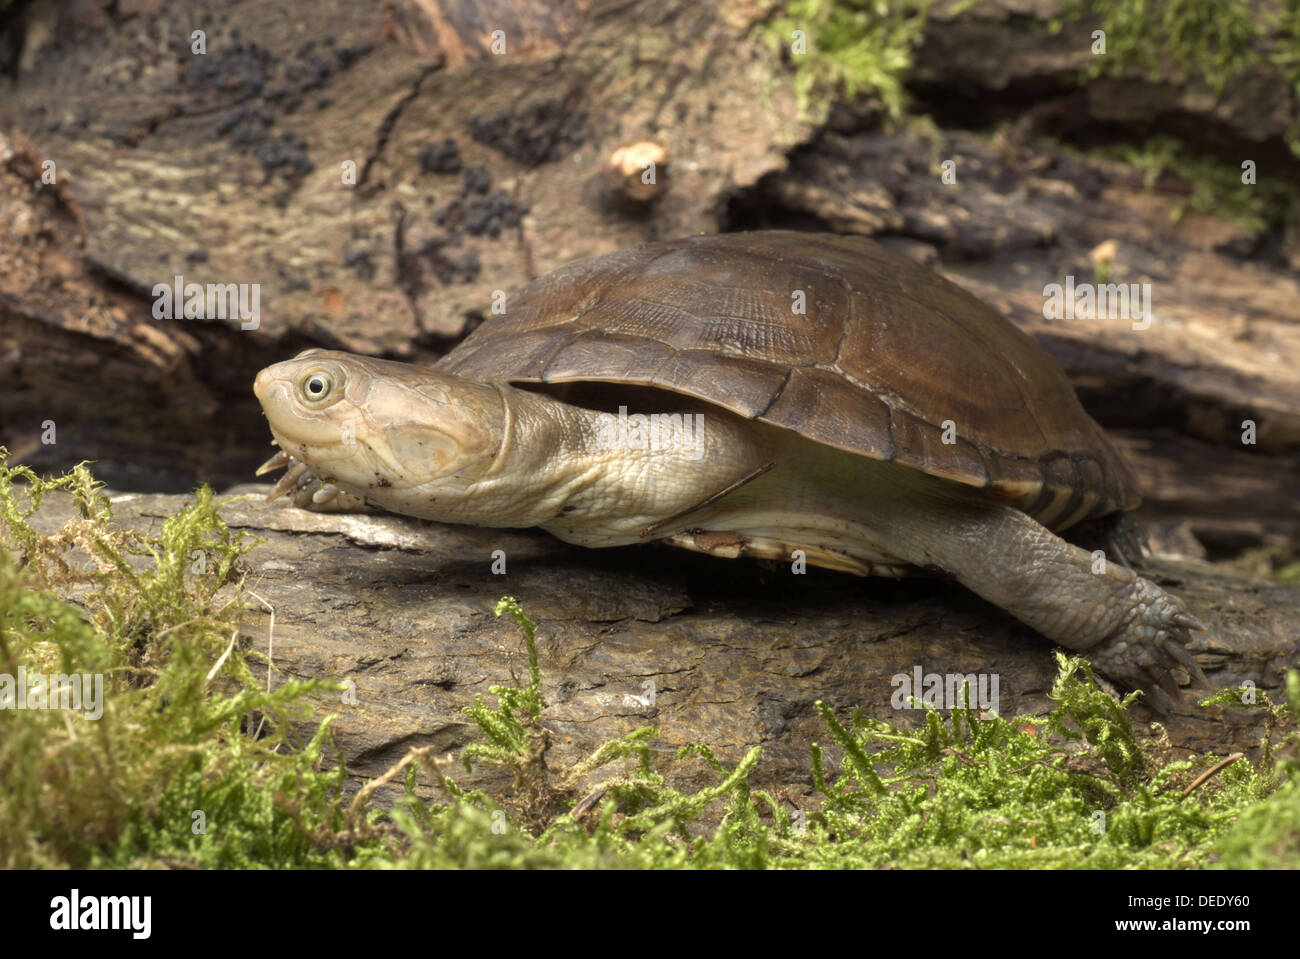 African helmeted turtle, Pelomedusa subrufa Stock Photo